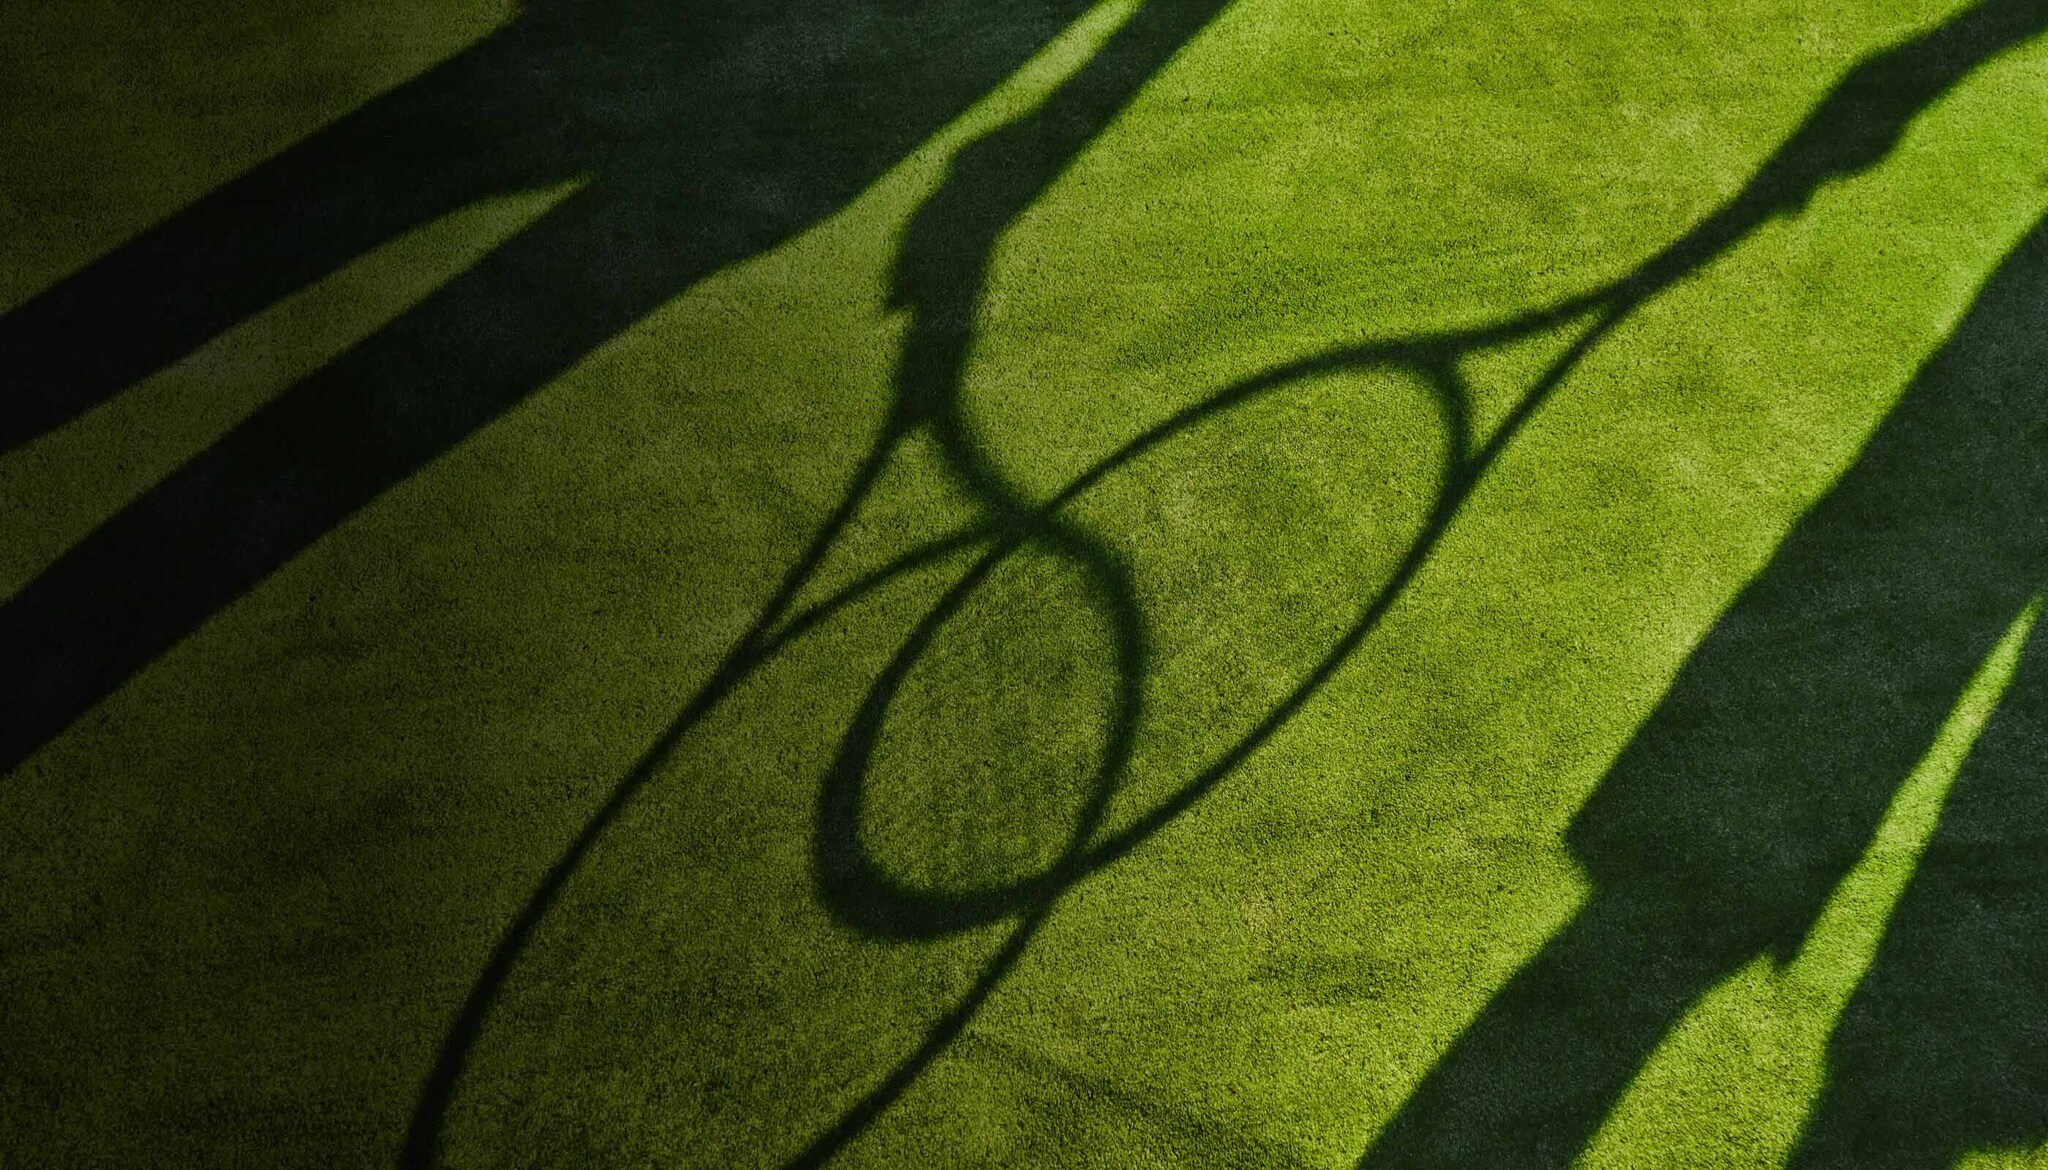 Shadow on Tennis Court